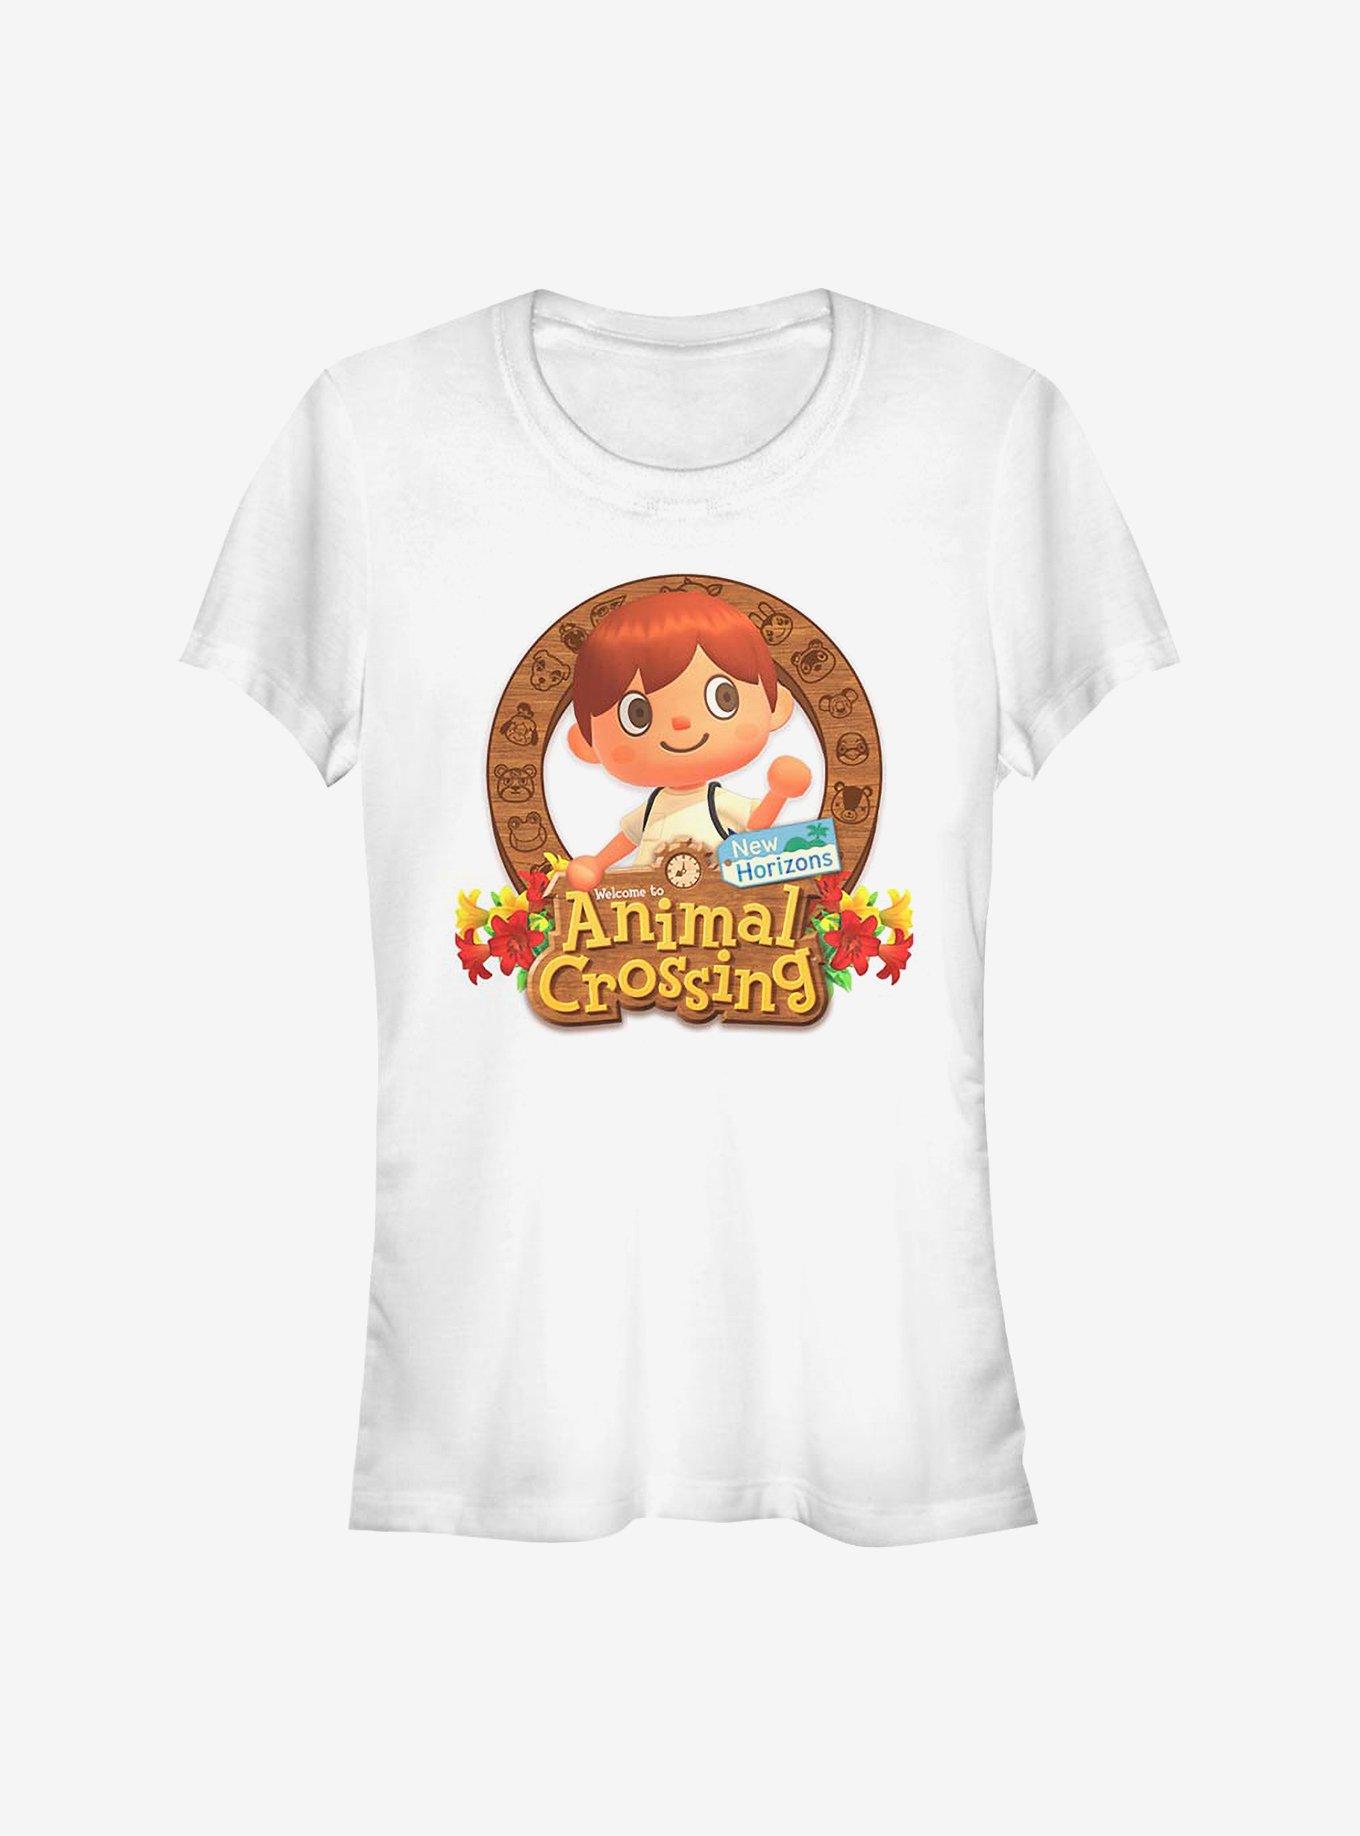 Nintendo Animal Crossing Villager Emblem Girls T-Shirt, , hi-res